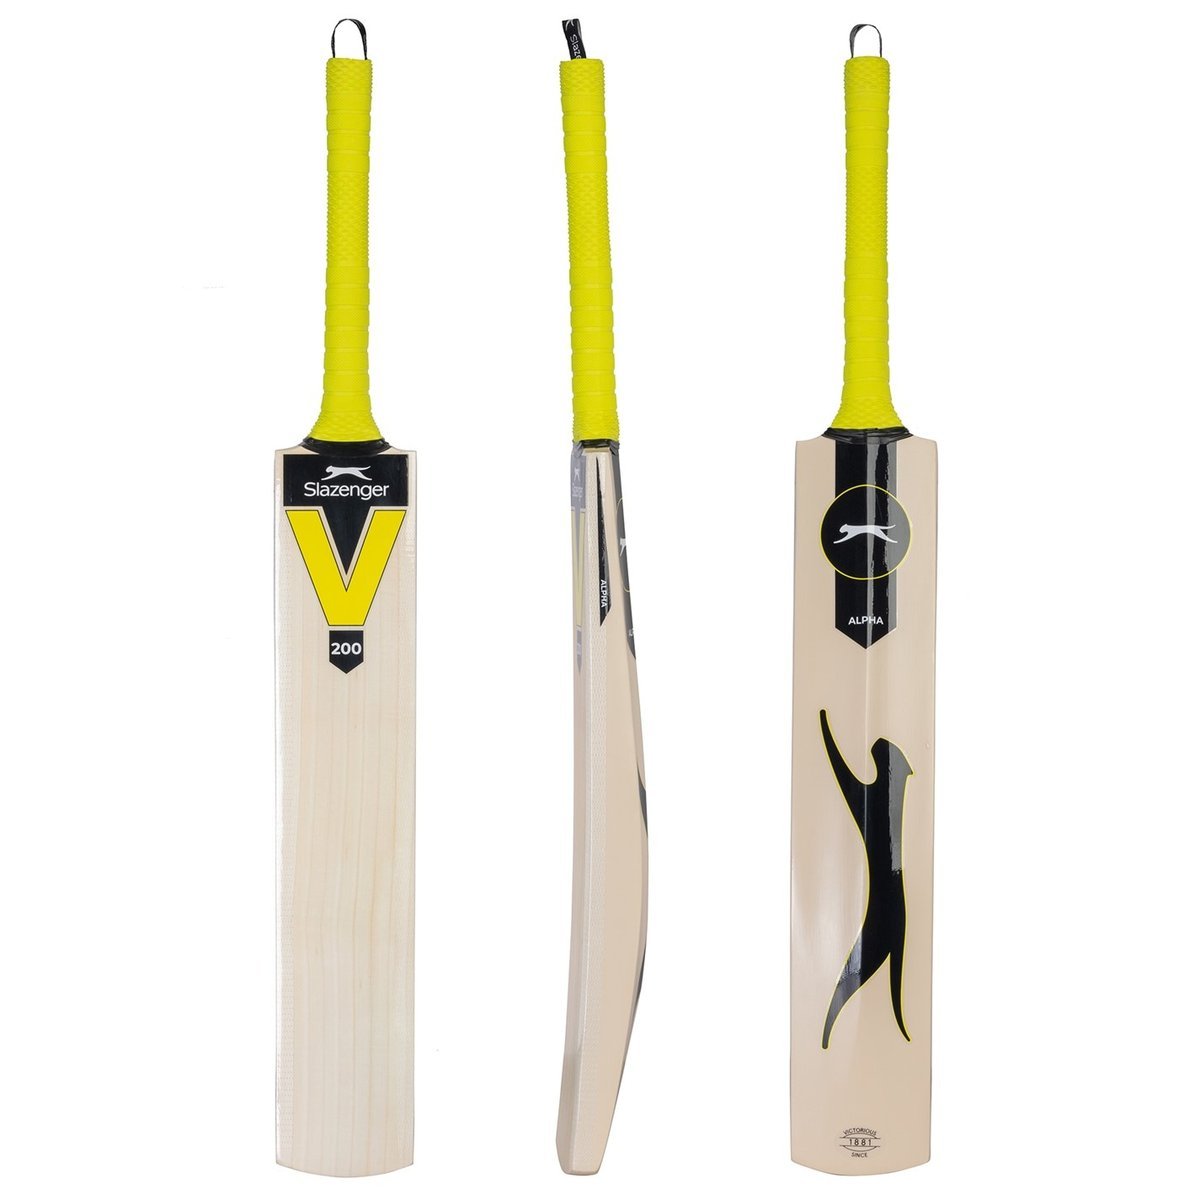 Bespoke Cricket Kits - Nike & adidas - Kitlocker.com